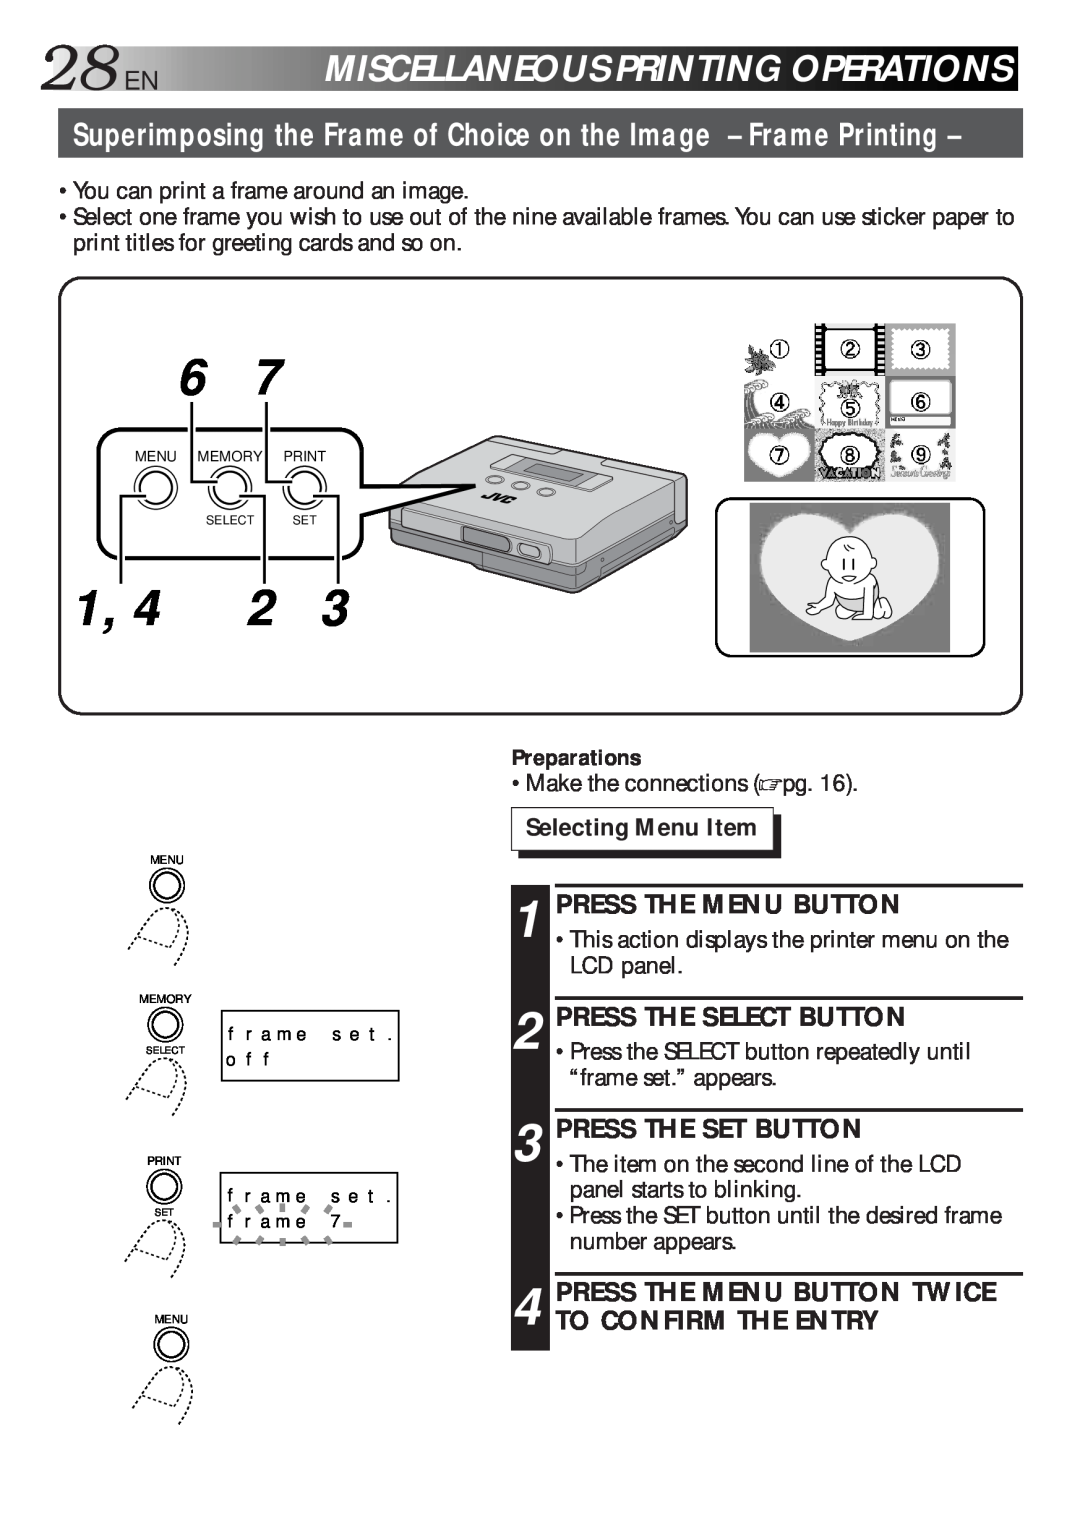 JVC GV-HT1U manual 28EN, Miscellaneousprintingoperations, Superimposing the Frame of Choice on the Image - Frame Printing 